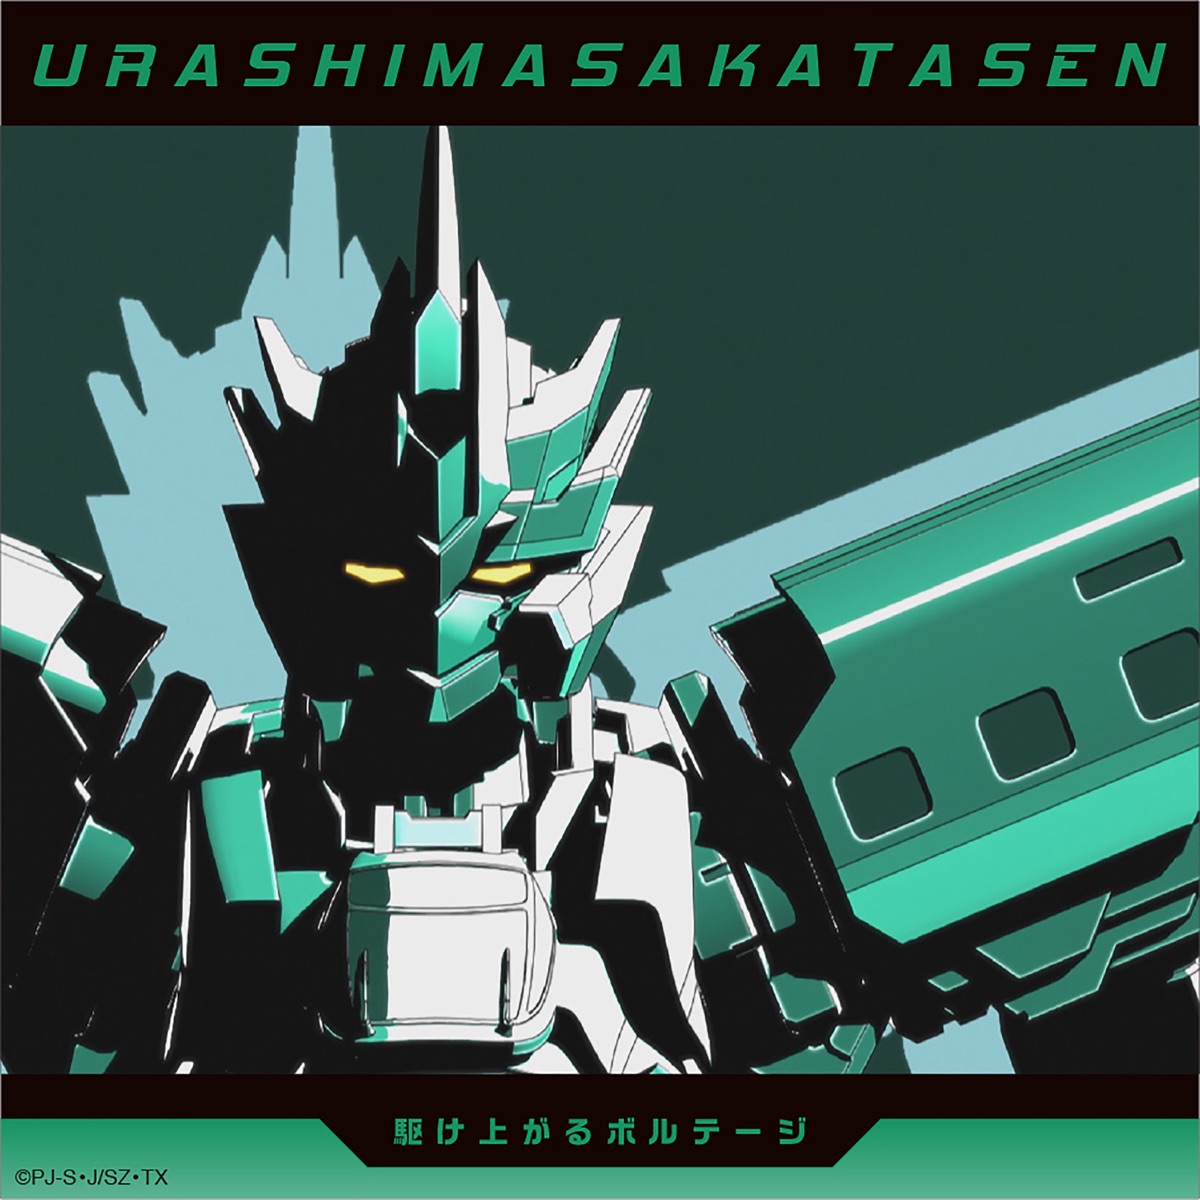 Cover for『Urashimasakatasen - Kakeagaru Voltage』from the release『Kakeagaru Voltage』